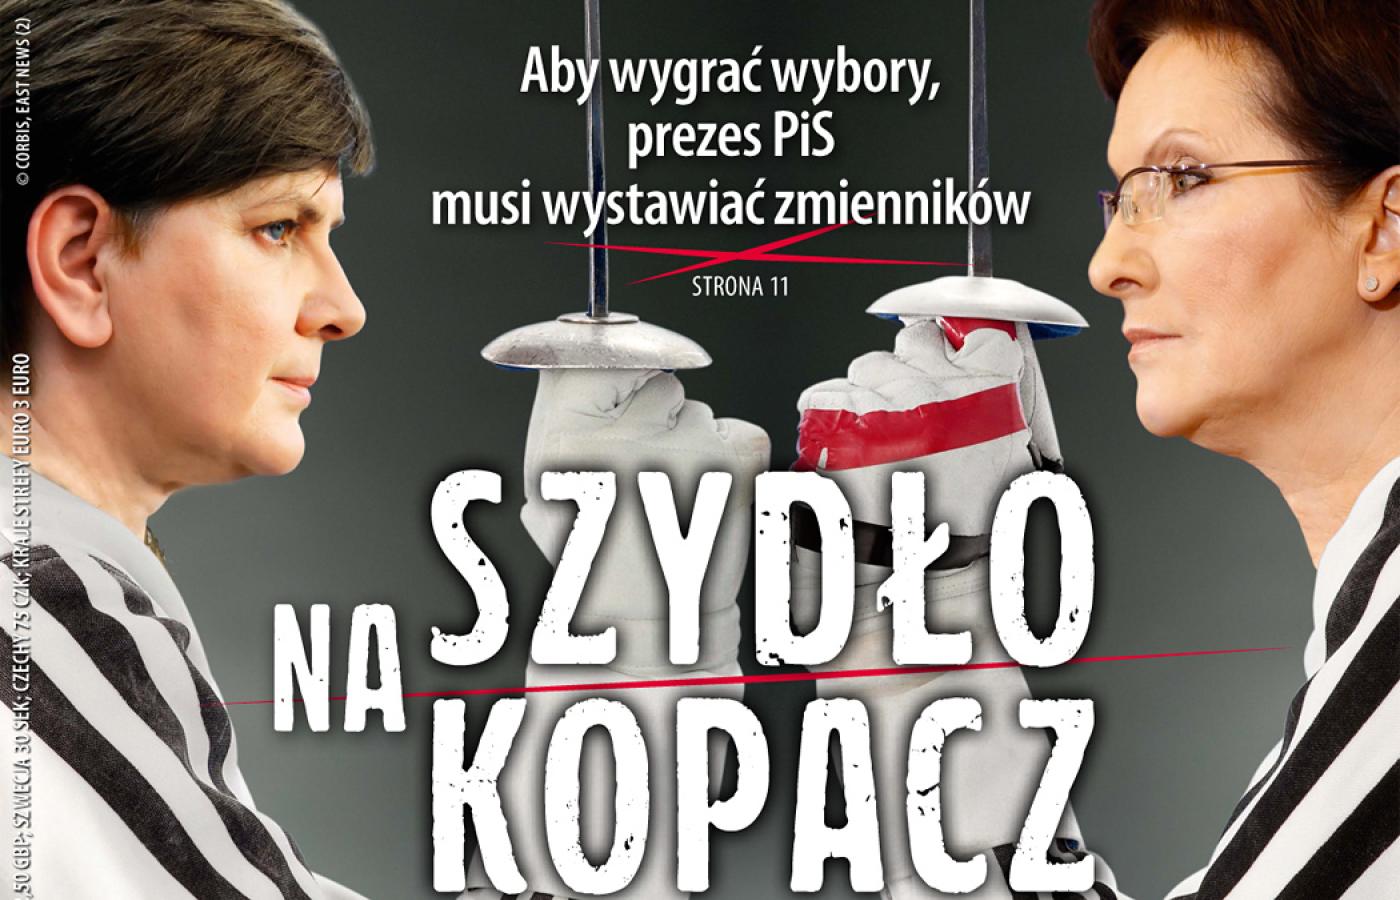 polityka-26-2015-cover-polityka-pl